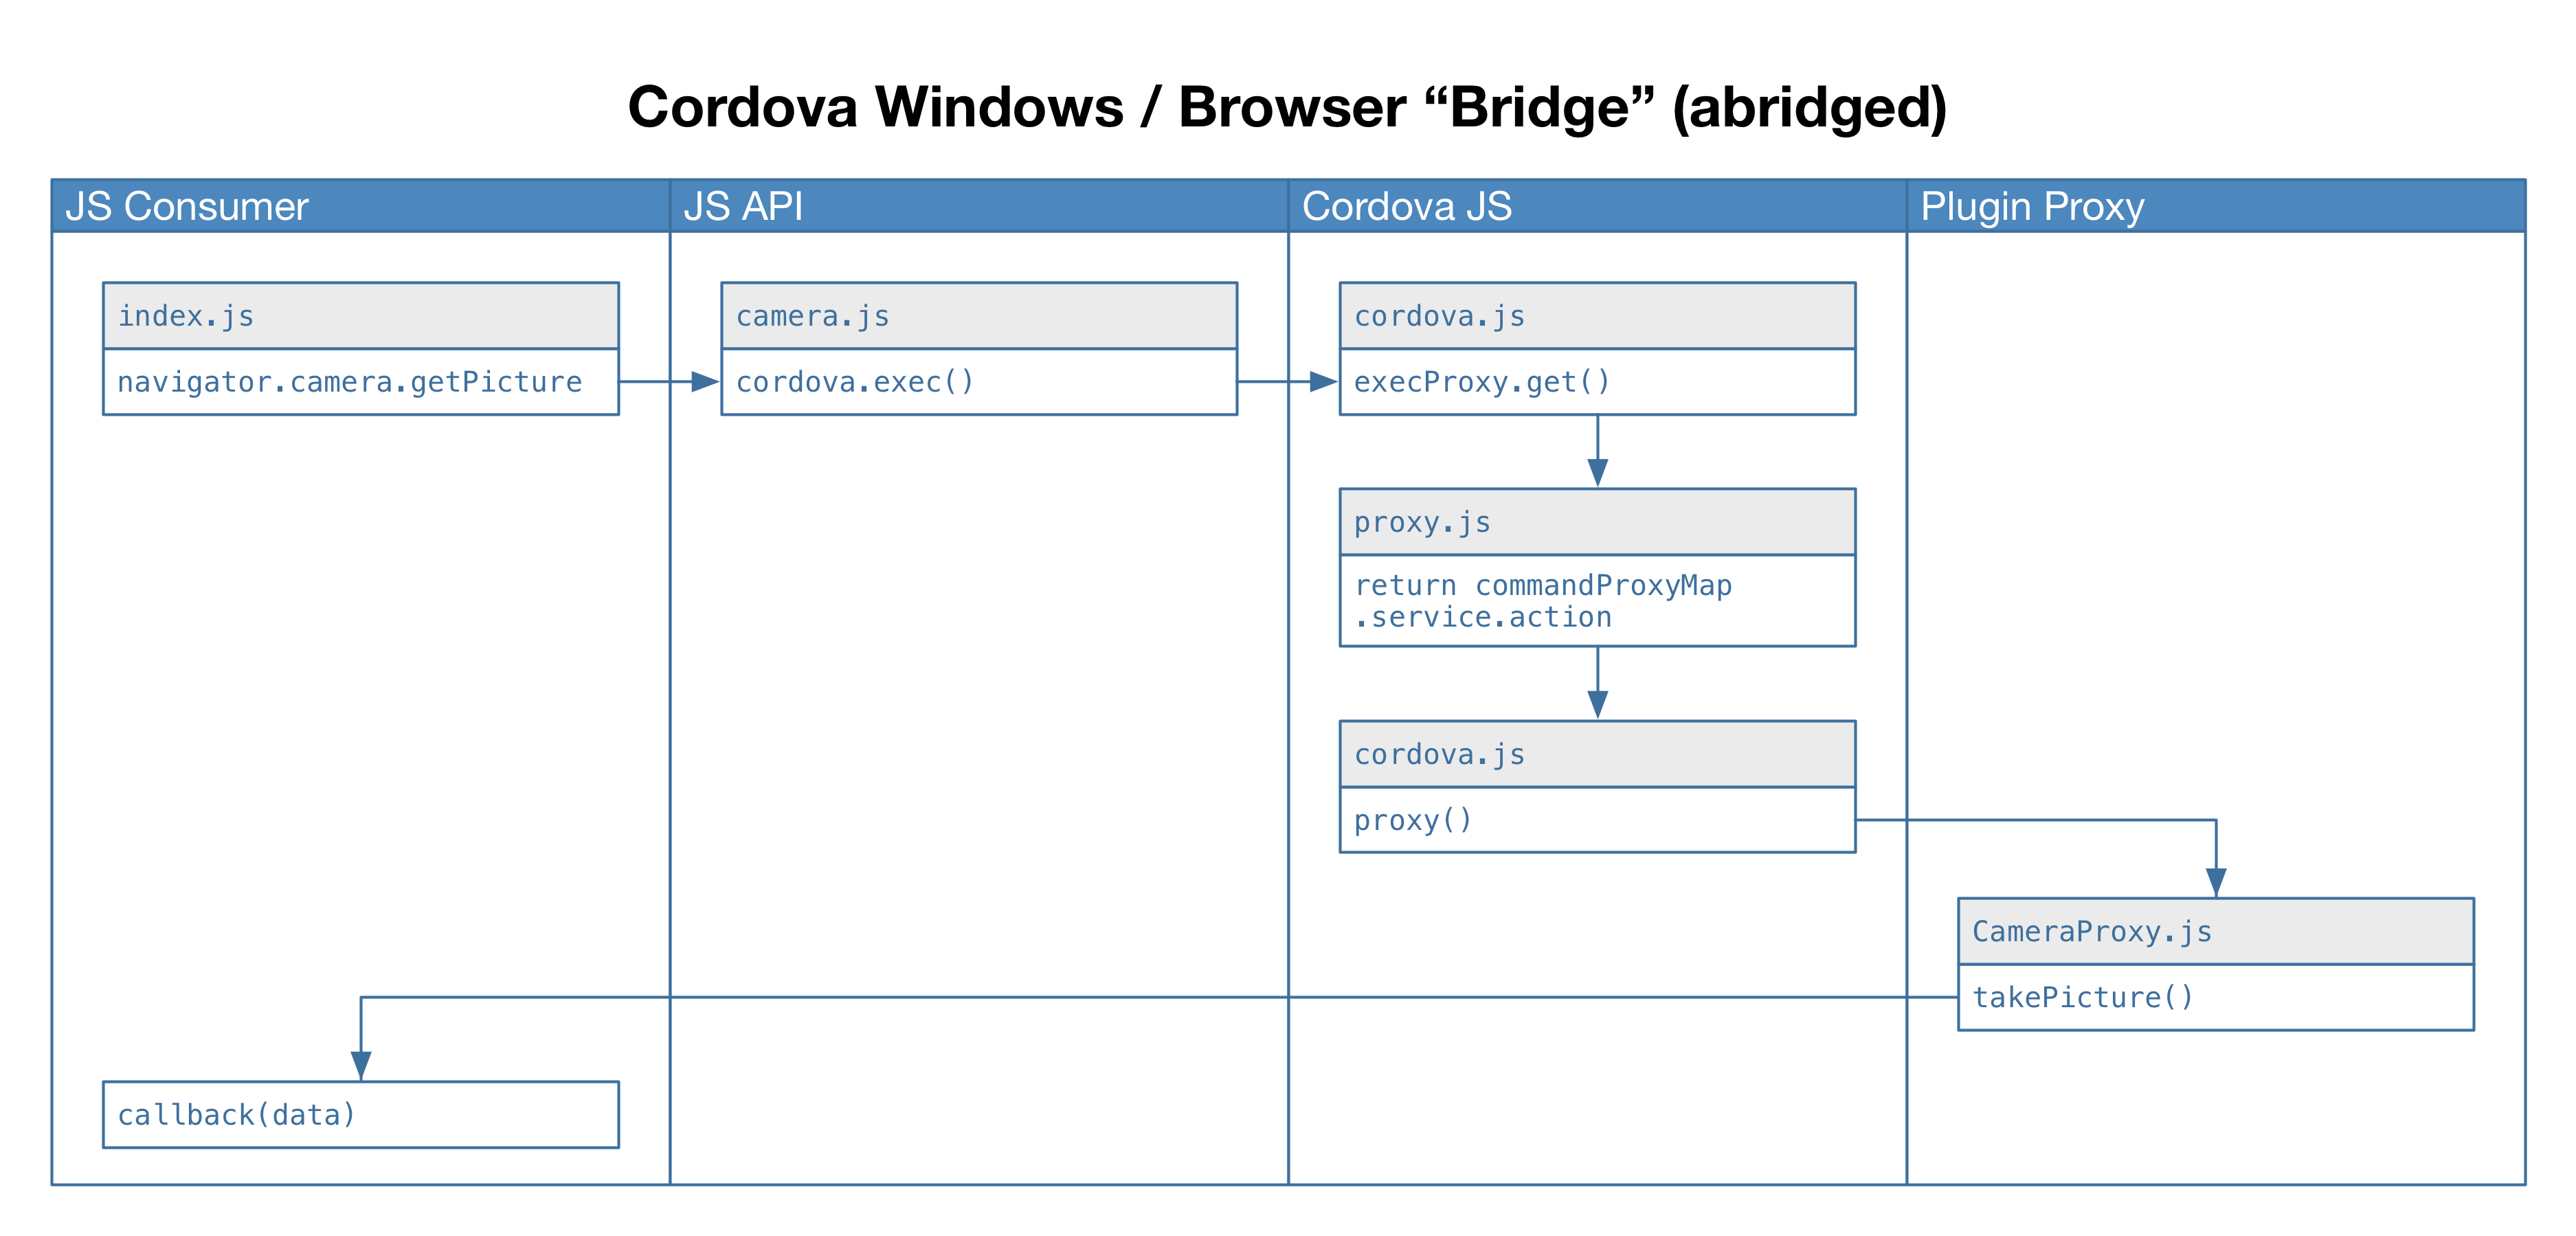 Browser & Windows Bridge